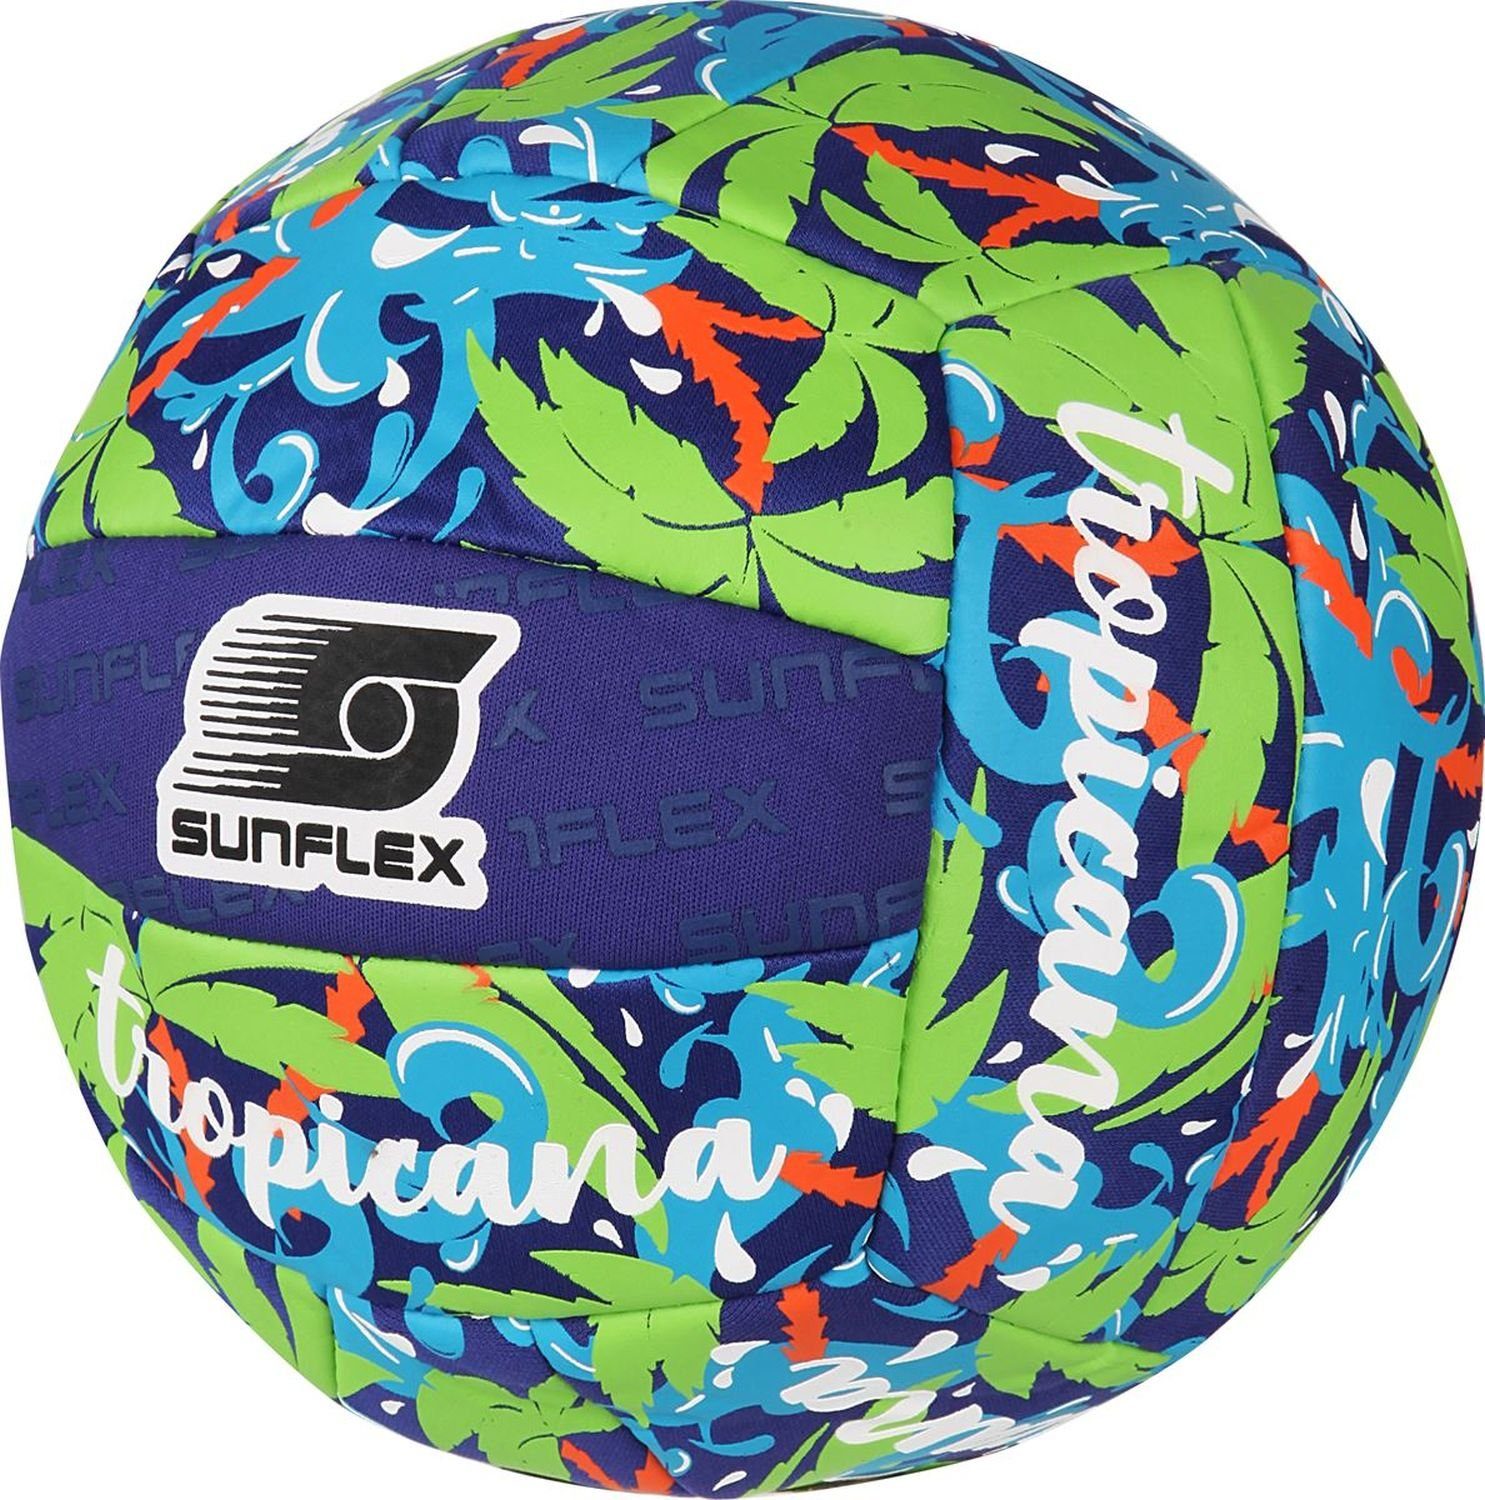 Sunflex Softball 5 Tropical Wave Größe Beachball